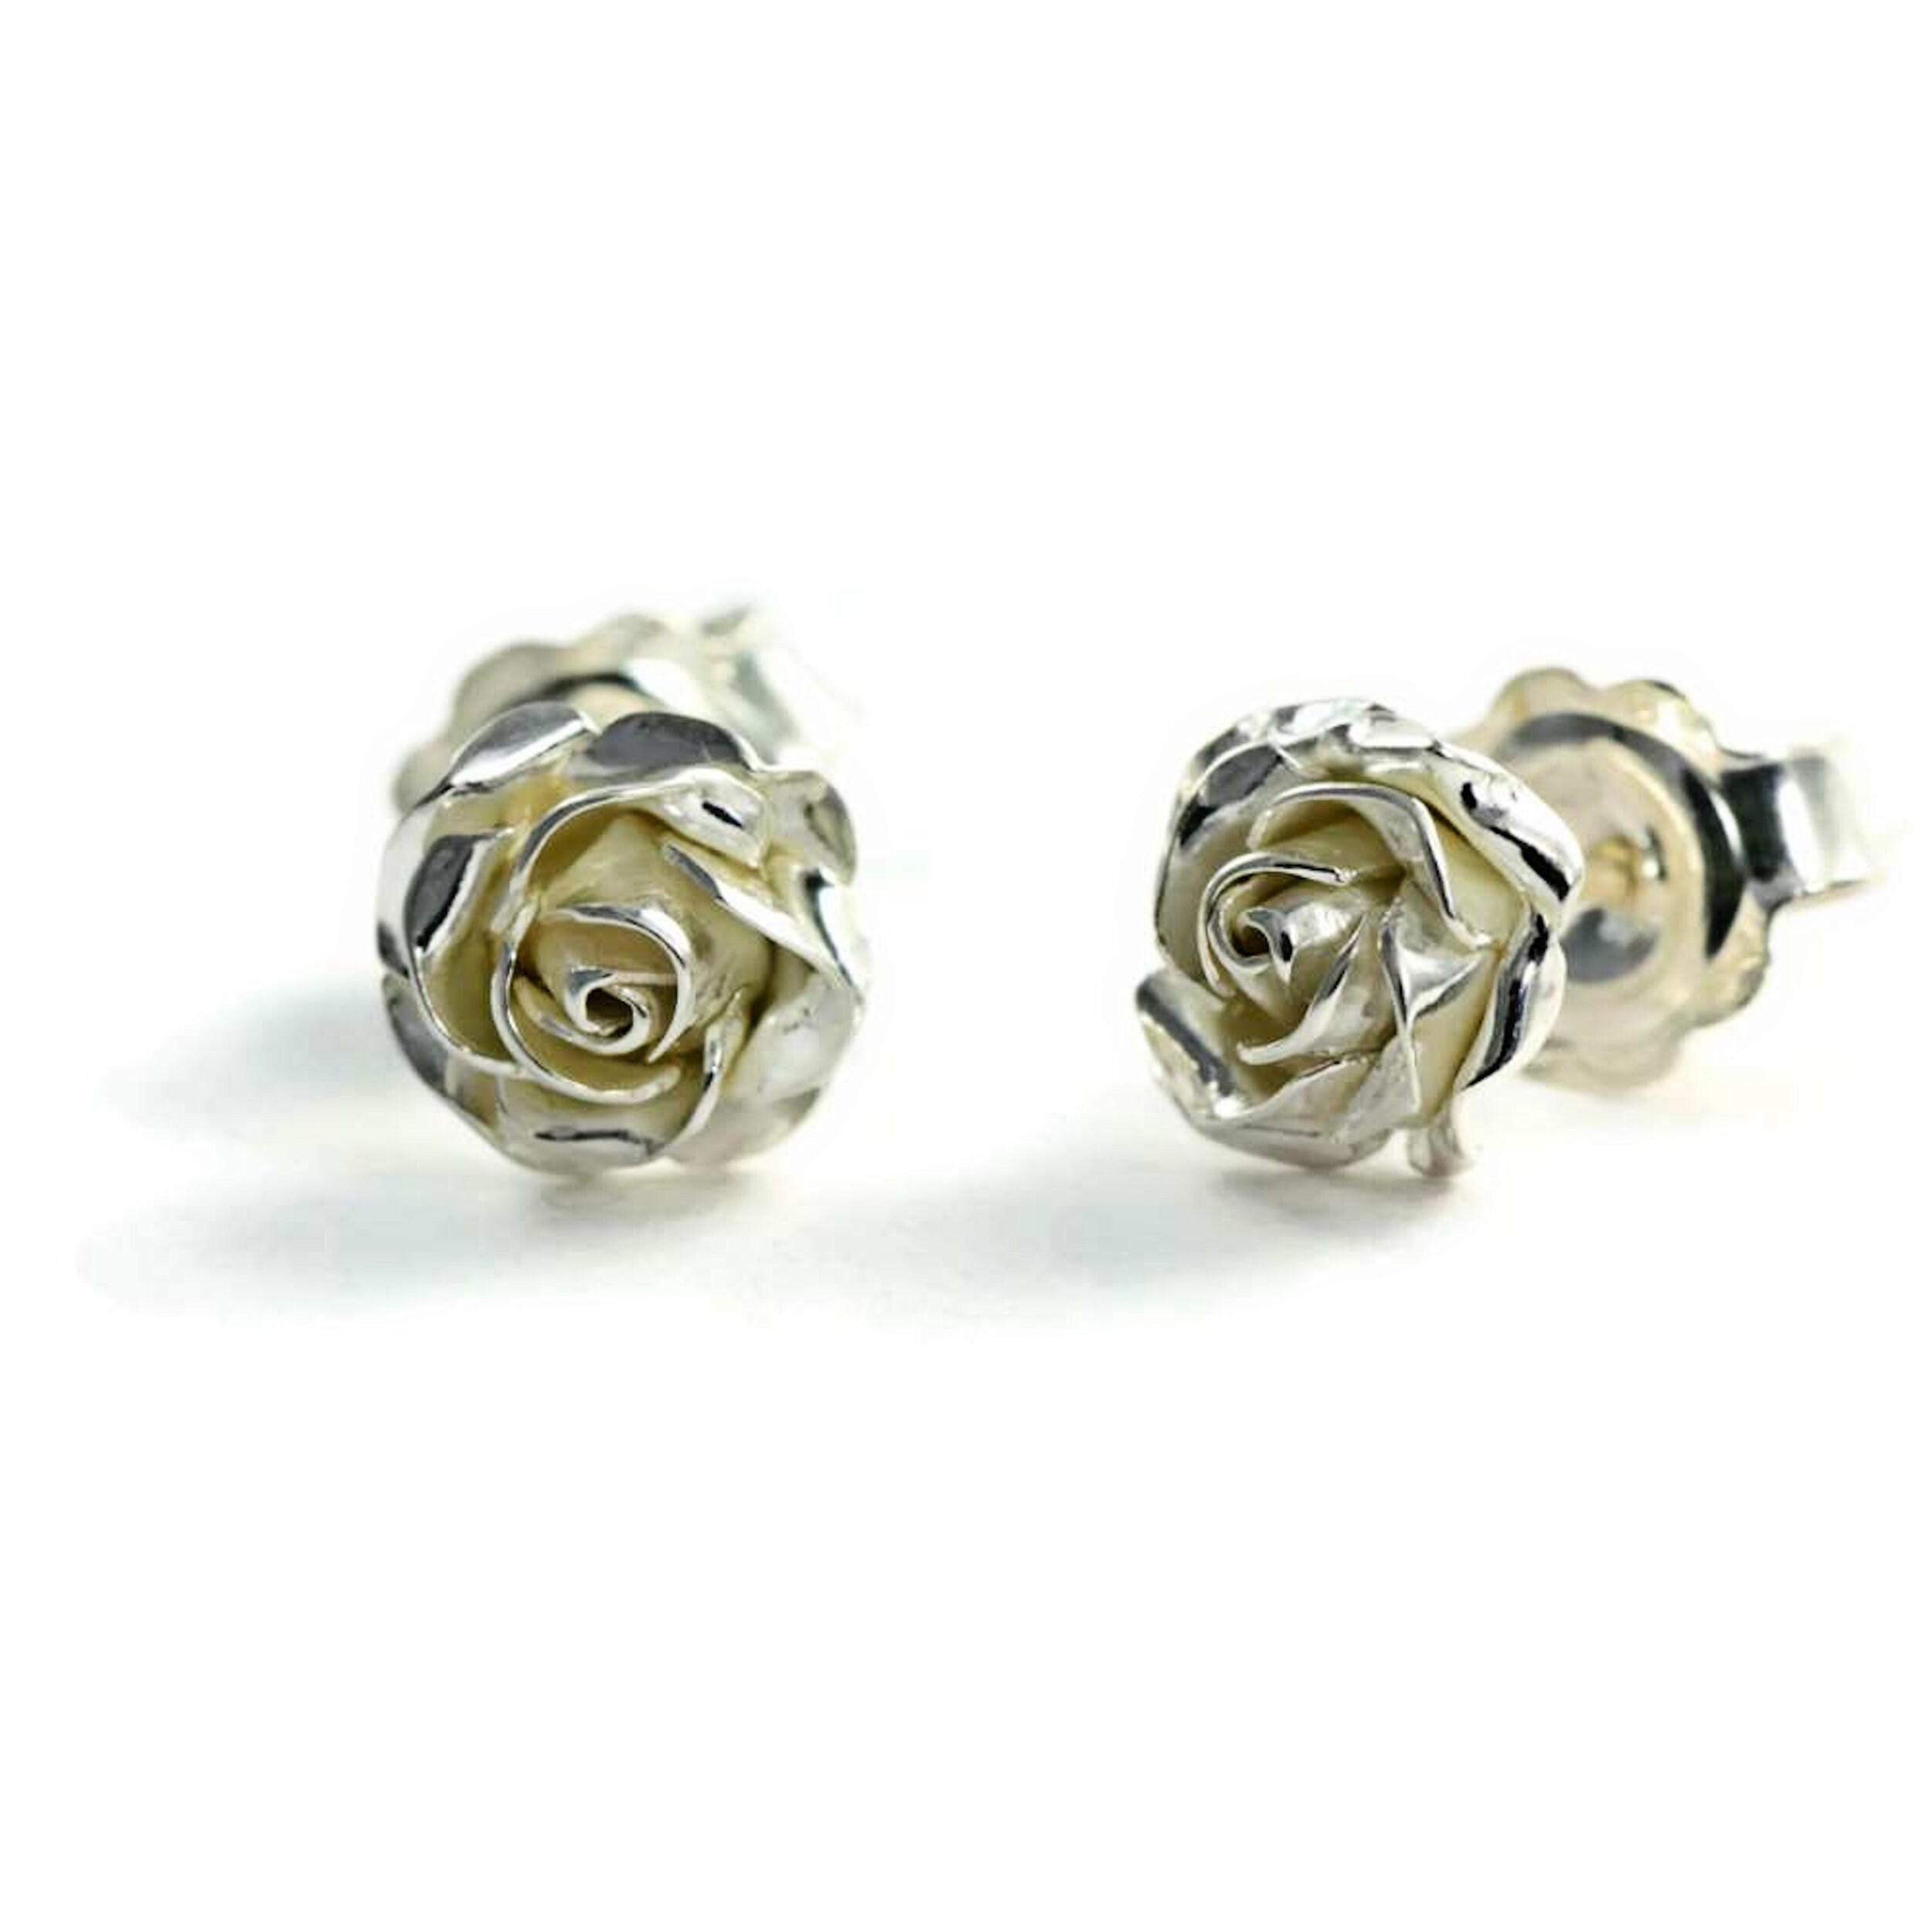 Silver rose earrings Rose earrings Rose stud earrings | Etsy